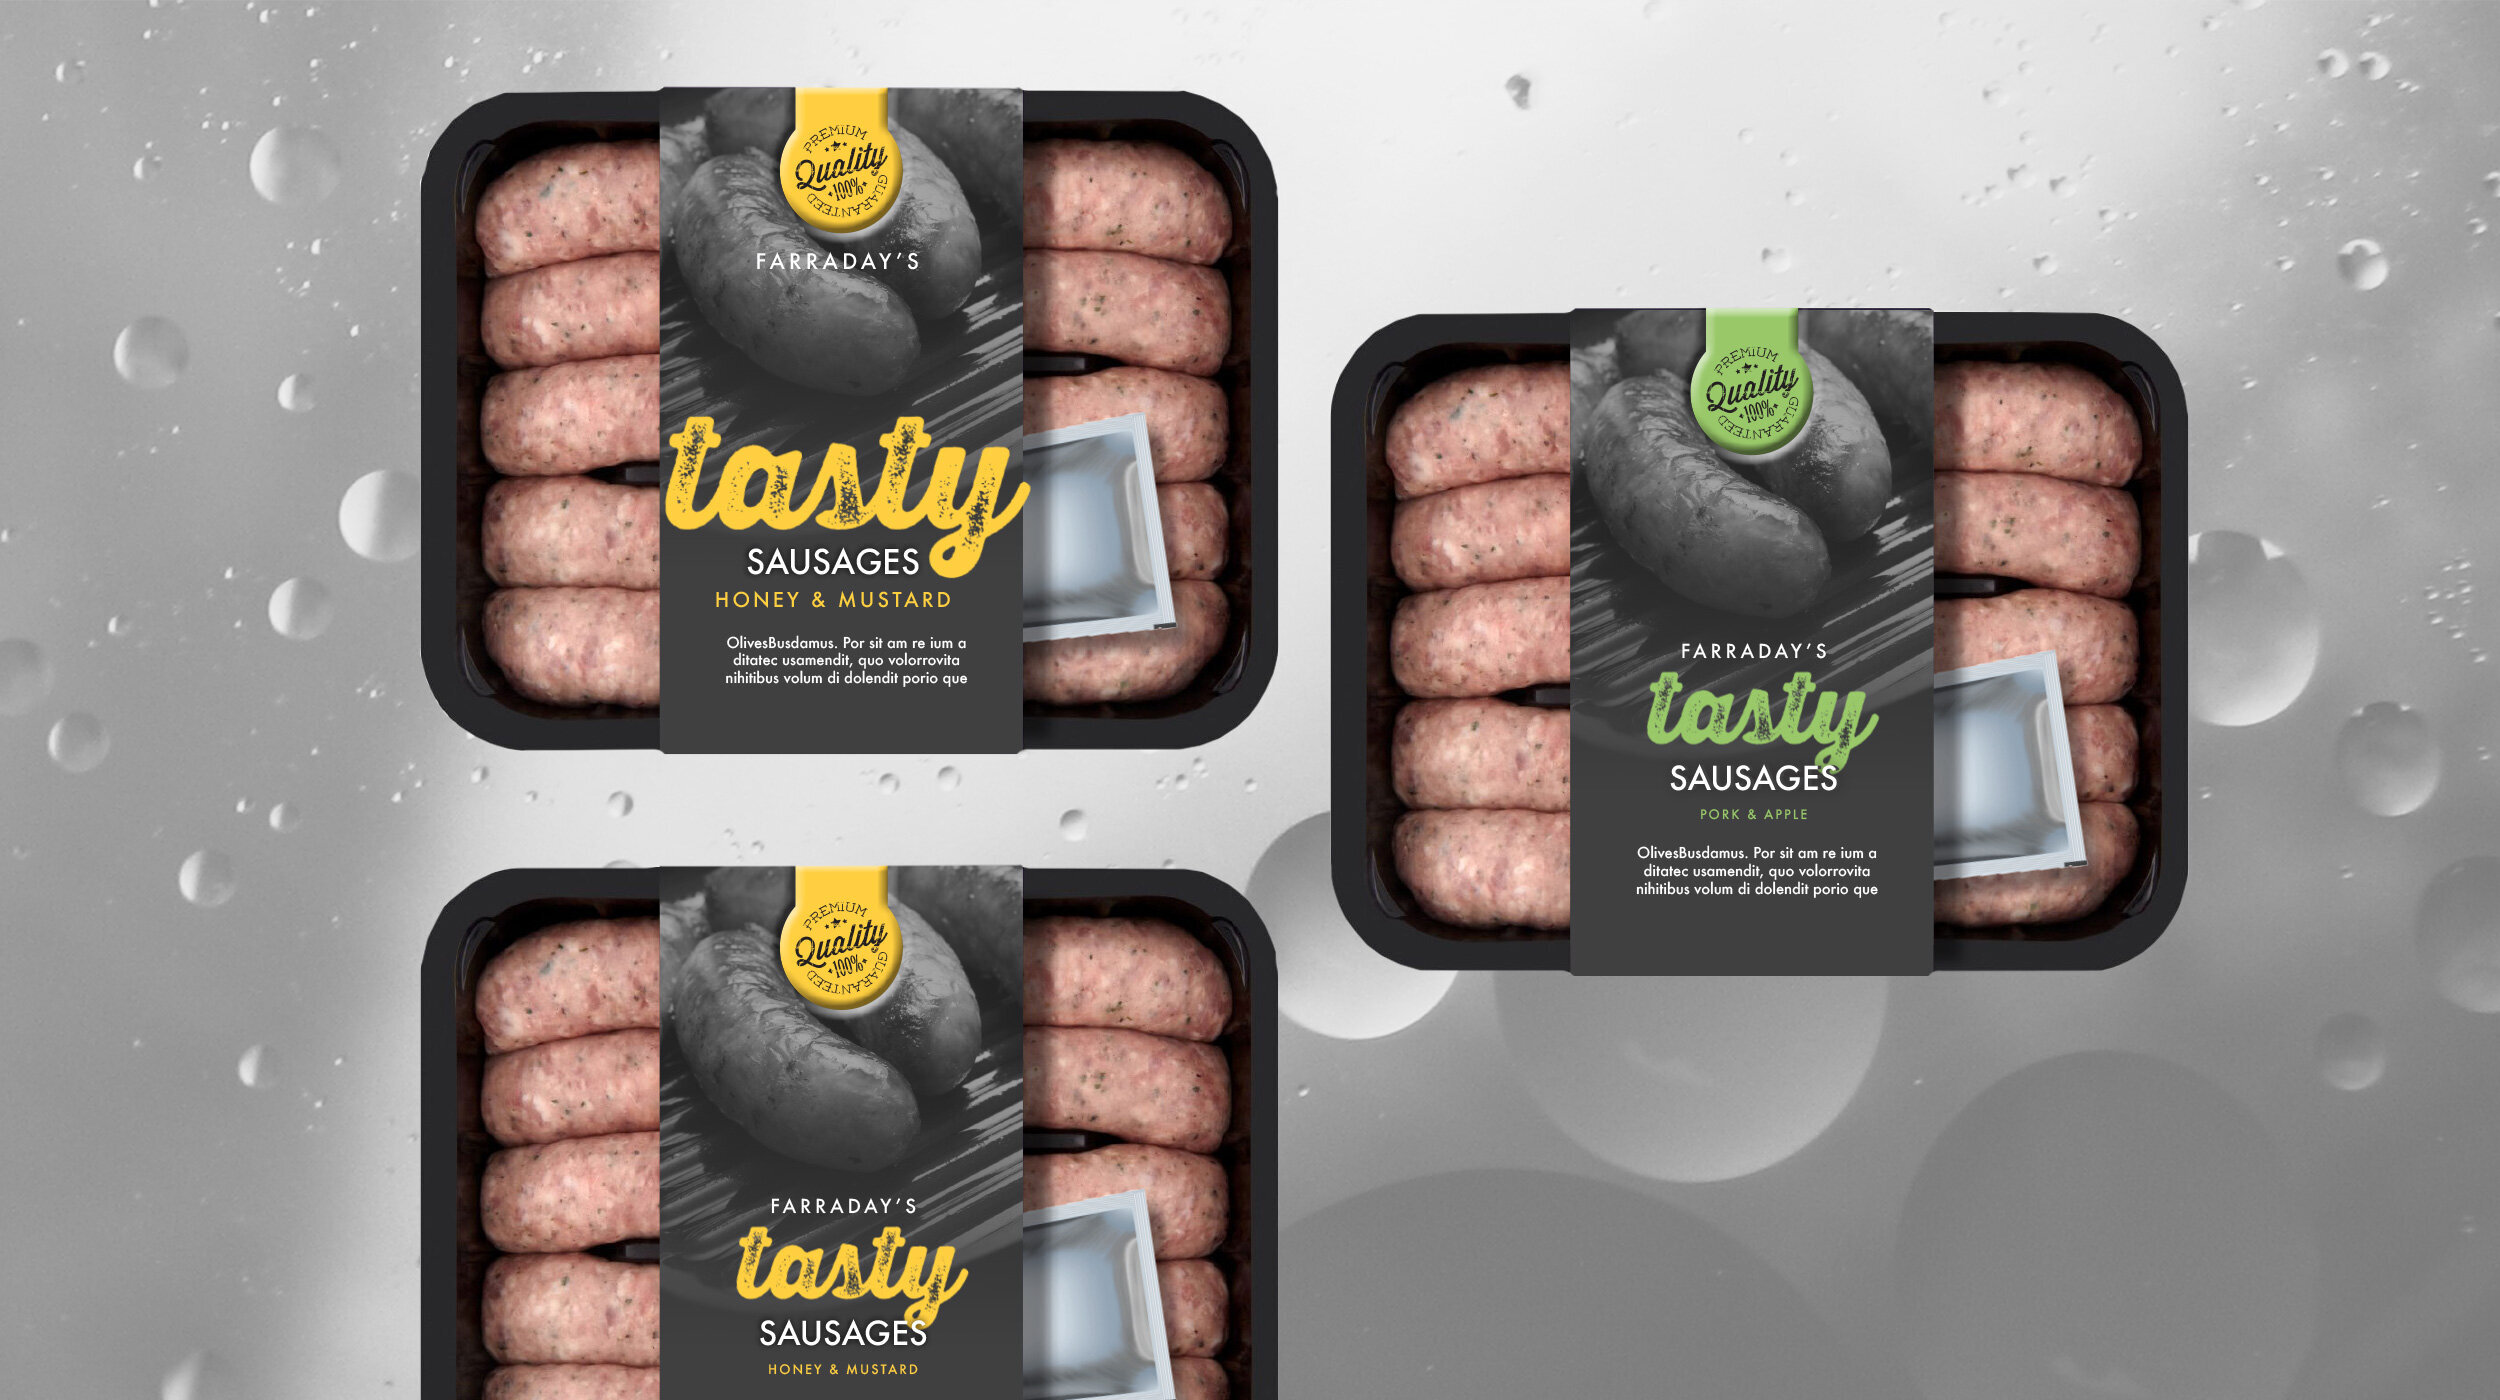 brand-food-packaging-design-farradays-tasty-adam-thorp-5.jpeg